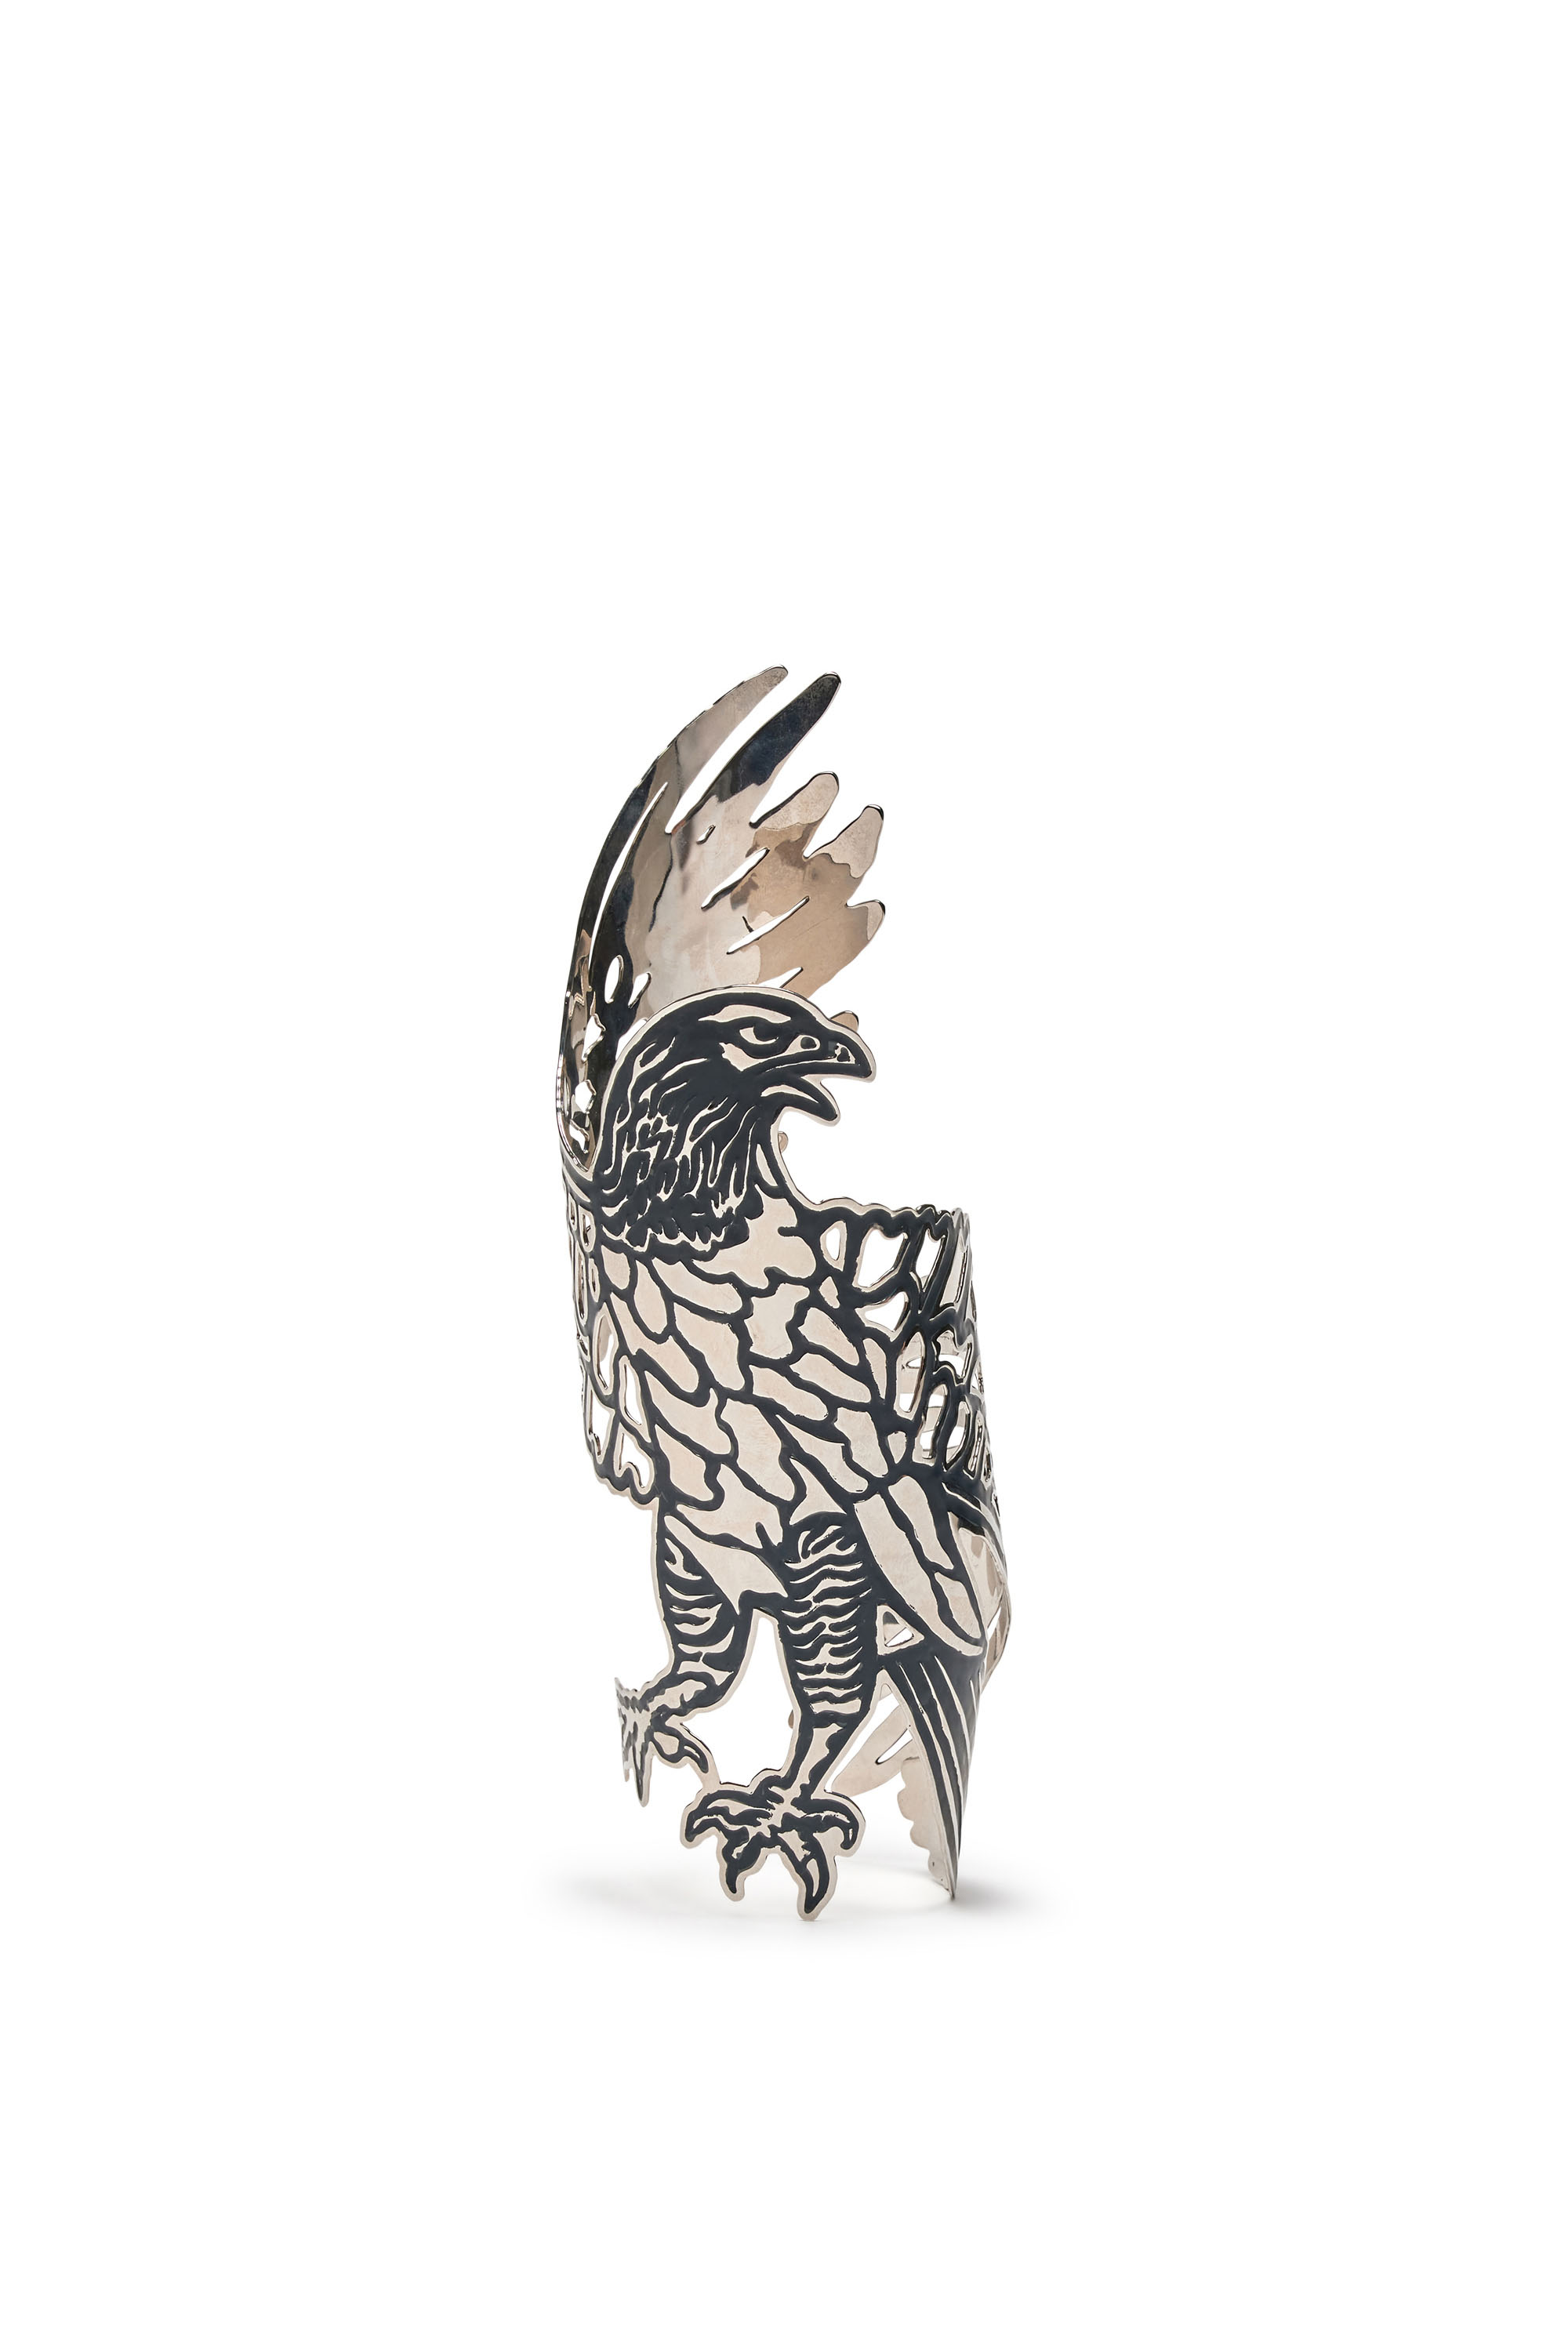 Diesel - EAGLE ARMBAND, Female Eagle arm cuff in Silver - Image 1